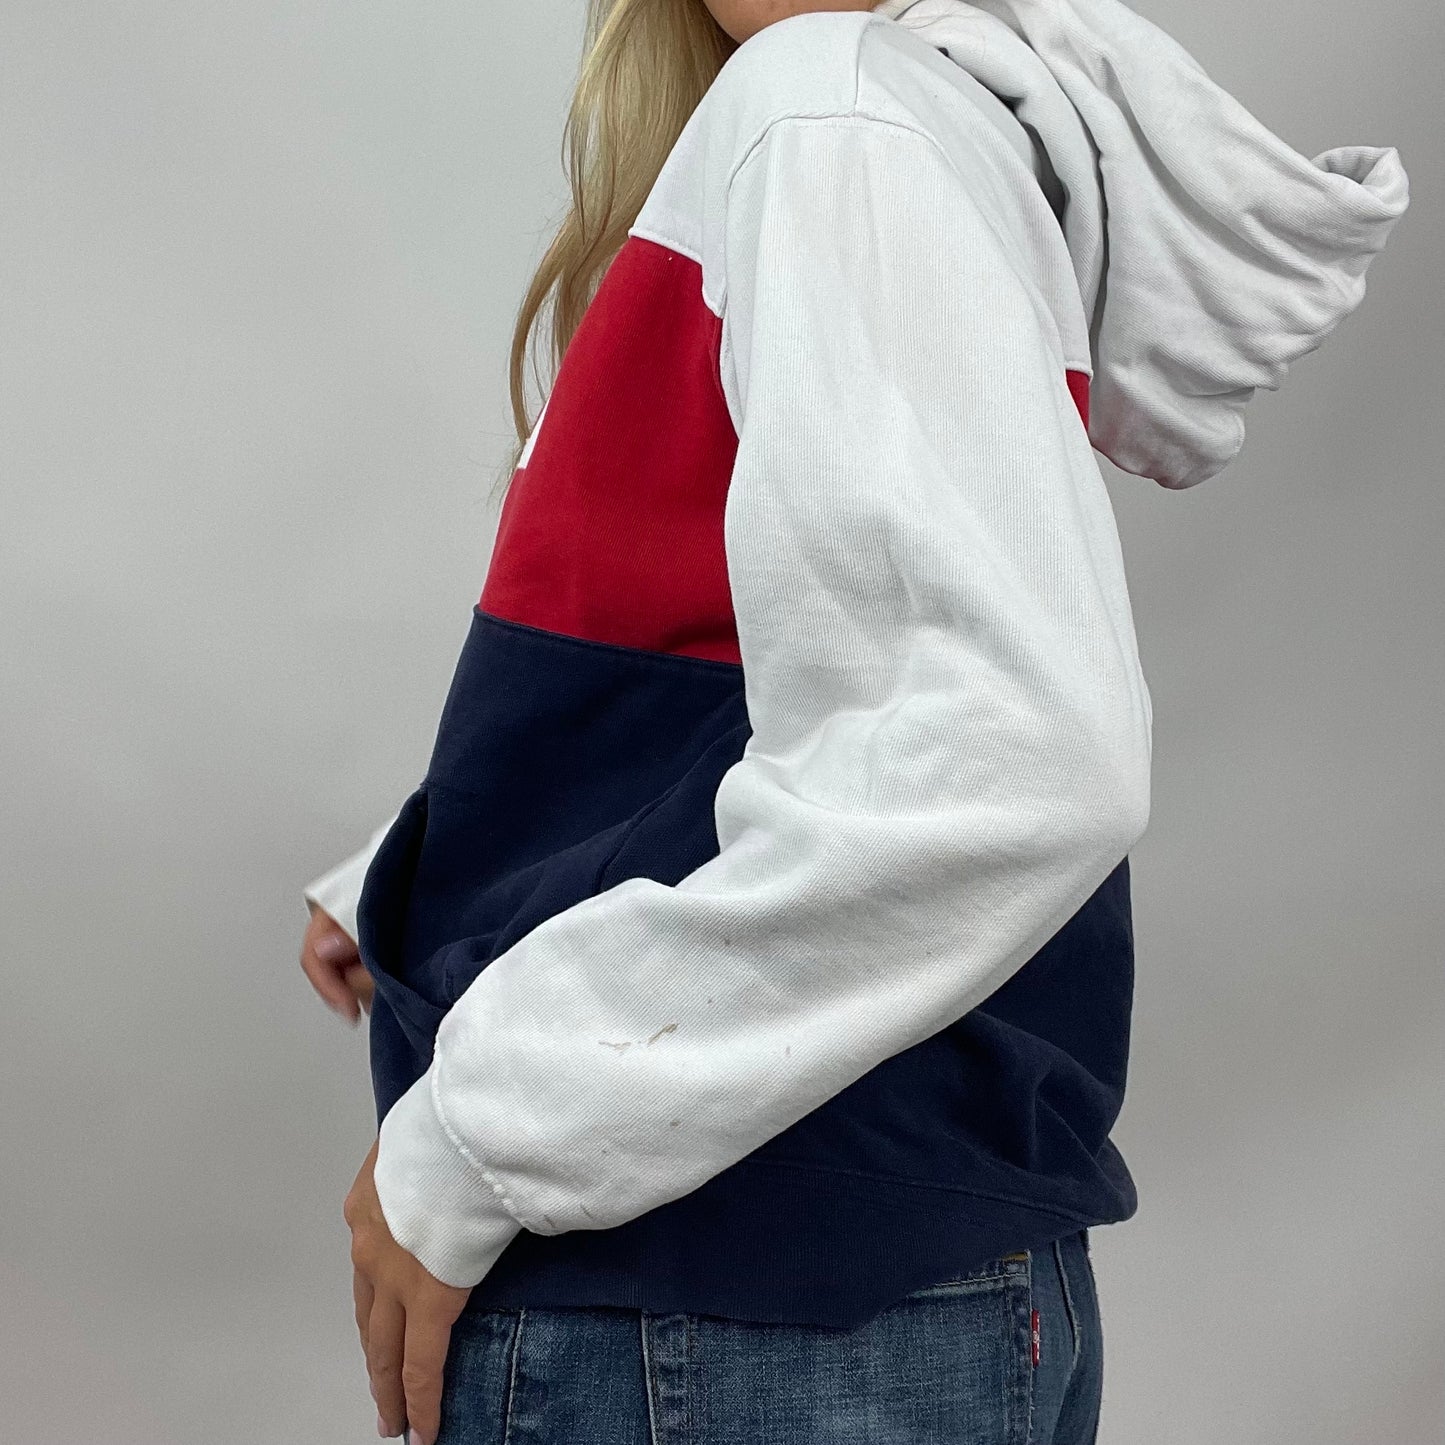 HAILEY BIEBER DROP | medium white, red & blue levi’s hoodie